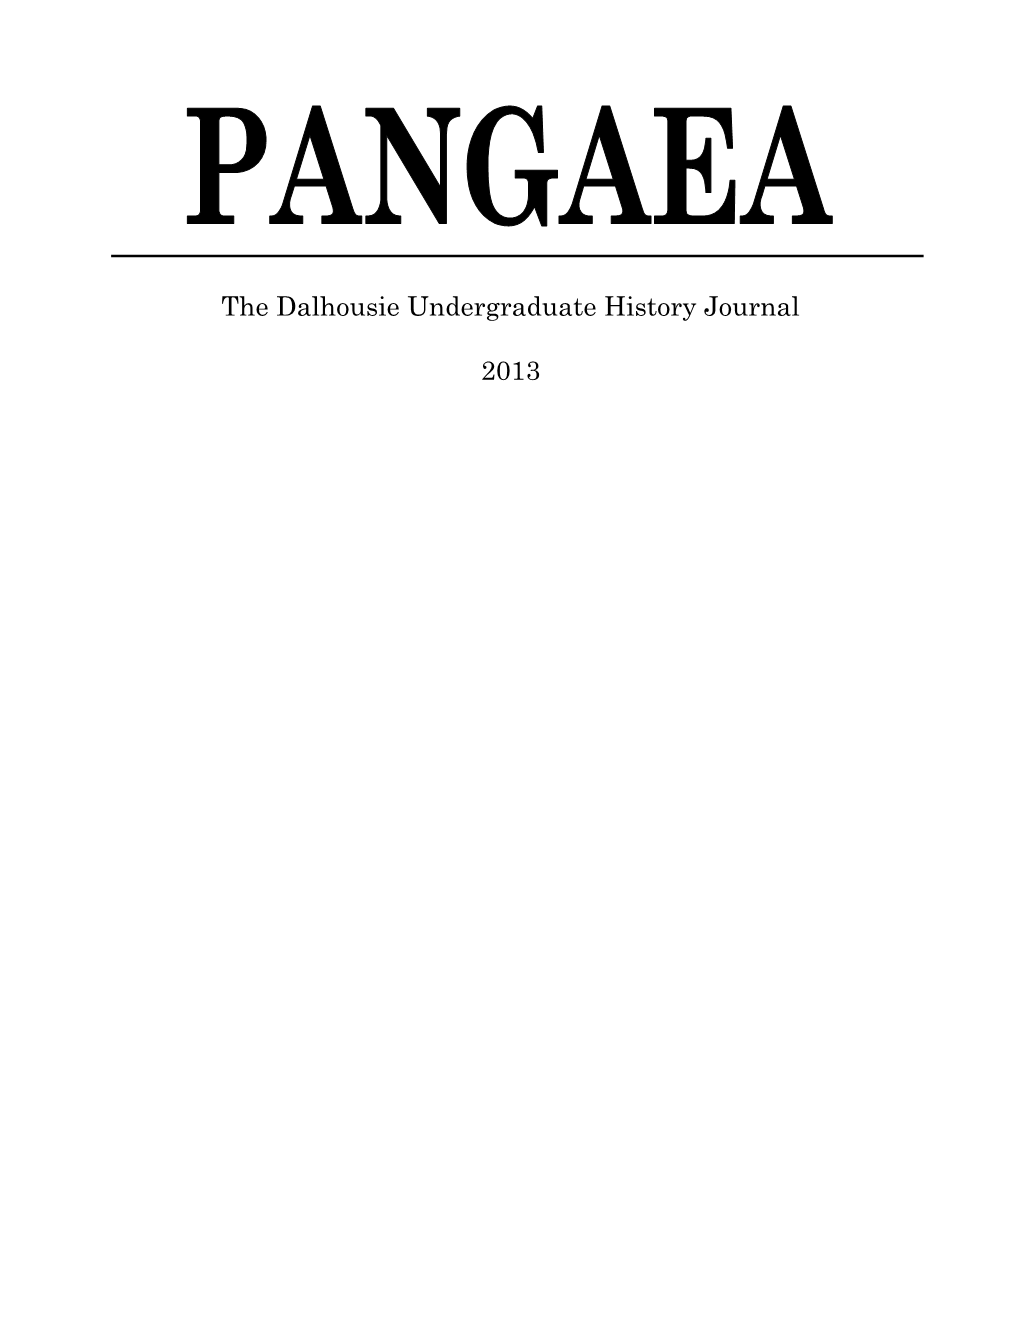 The Dalhousie Undergraduate History Journal 2013